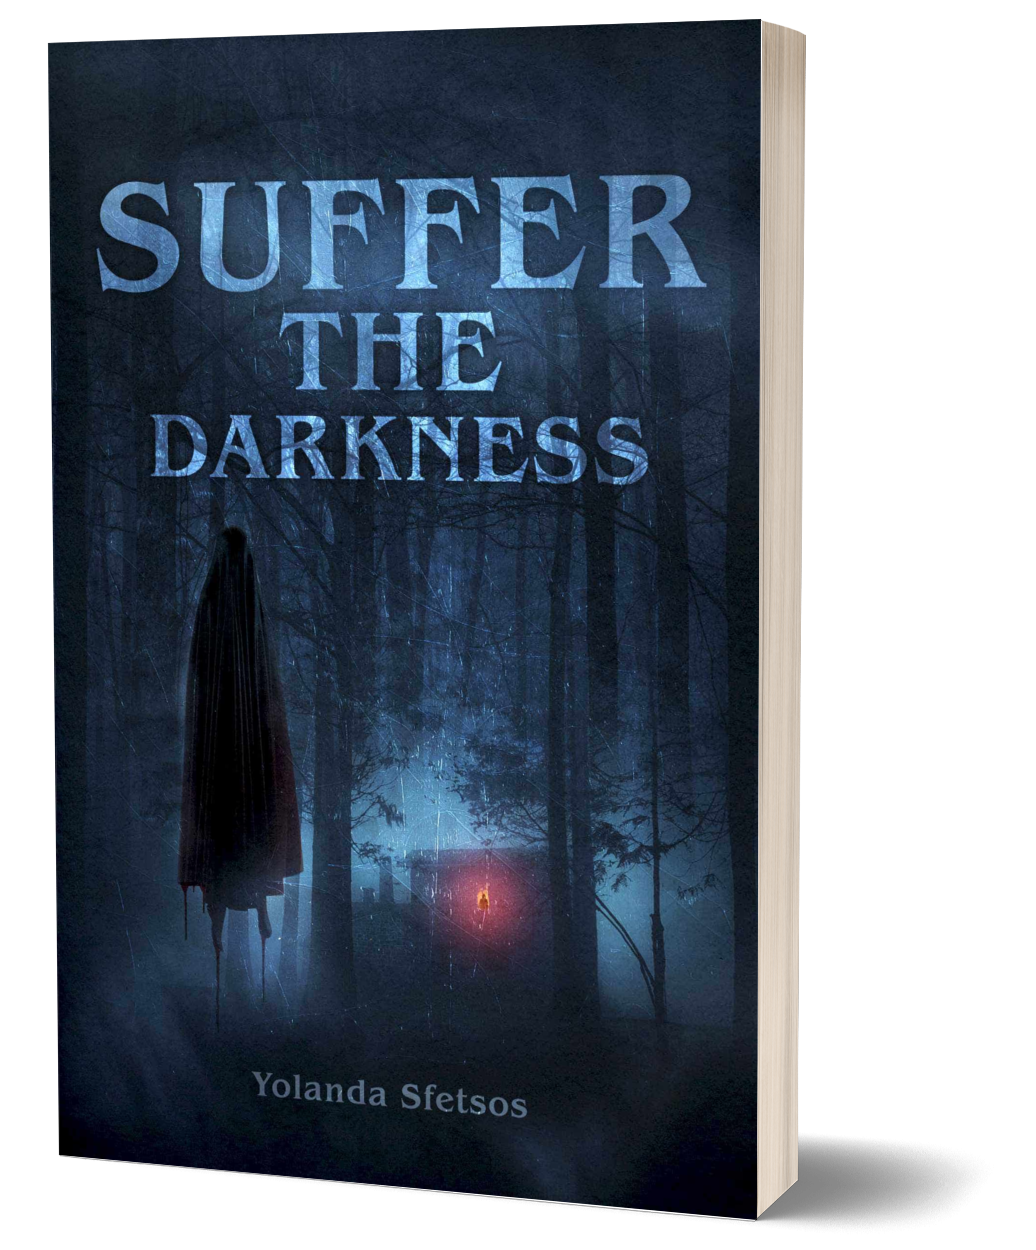 Suffer the Darkness by Yolanda Sfetsos